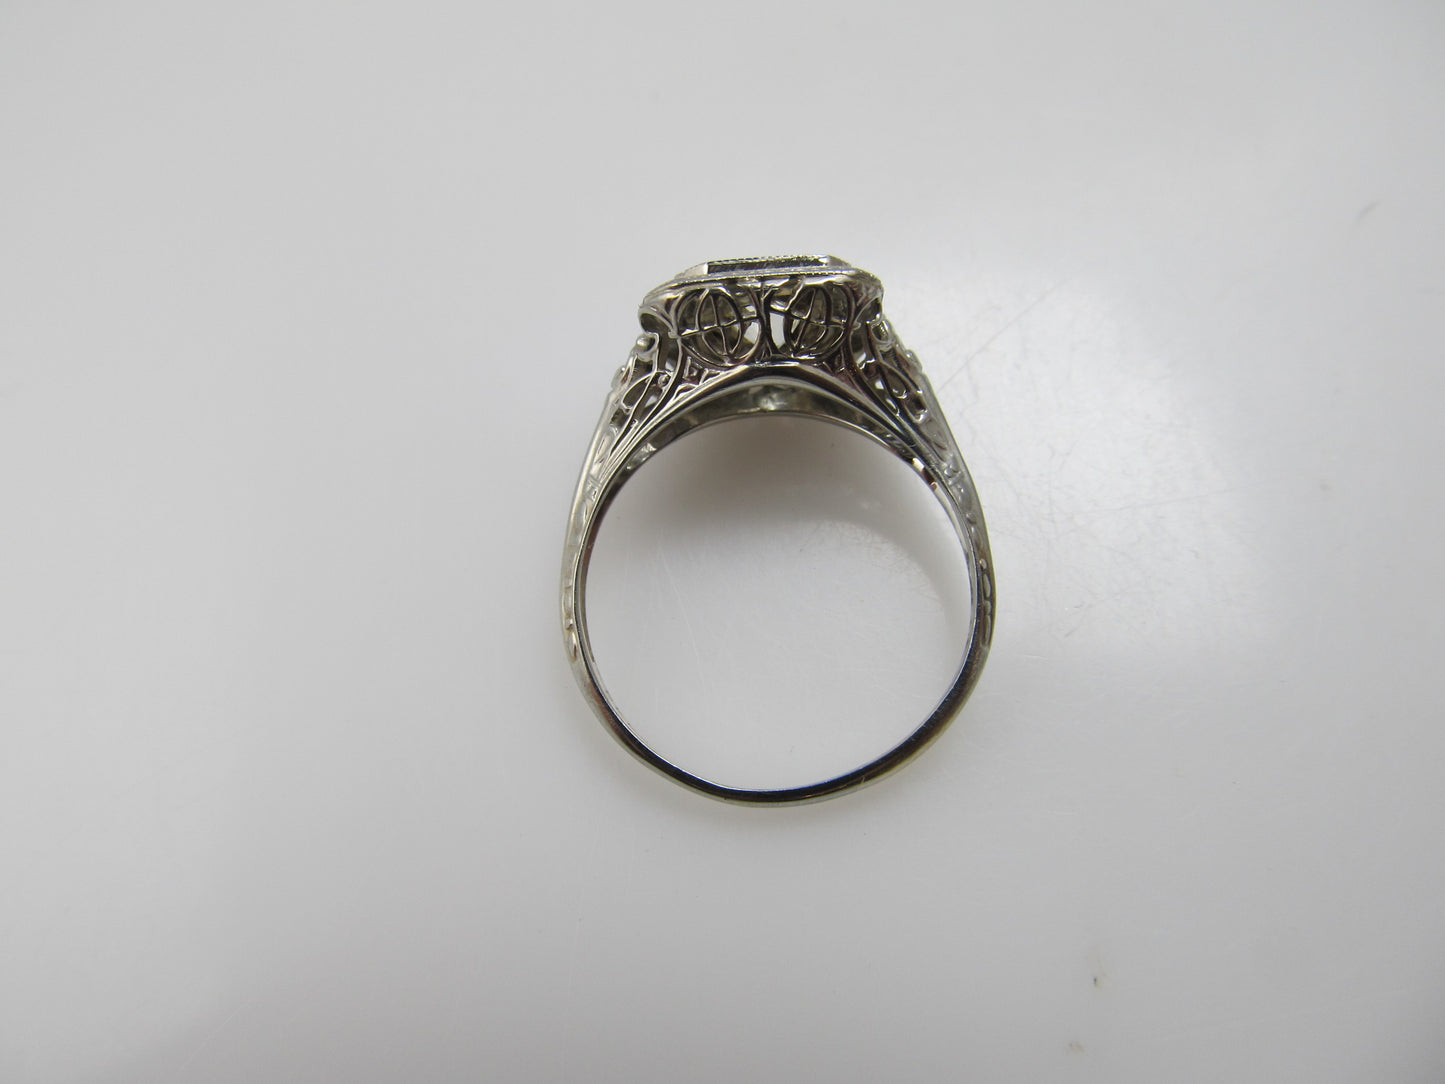 Antique .77ct diamond ring, 18k white gold filigree